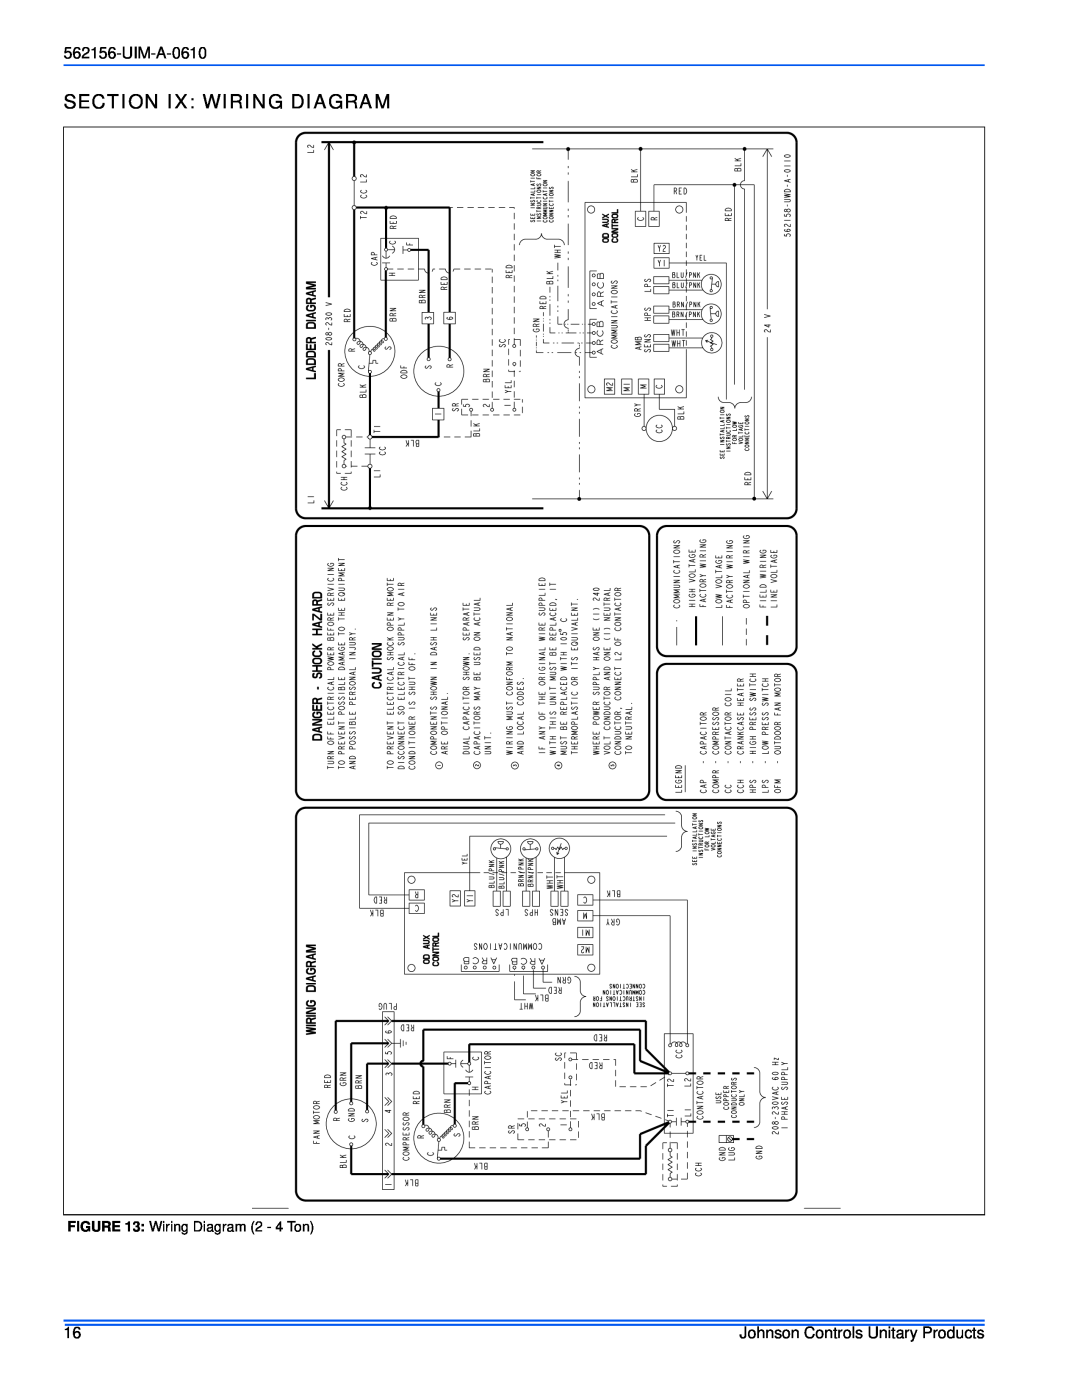 Johnson Controls AC6B, AL6B SERIES Section Ix Wiring Diagram, Wiring Diagram 2 - 4 Ton, Johnson Controls Unitary Products 